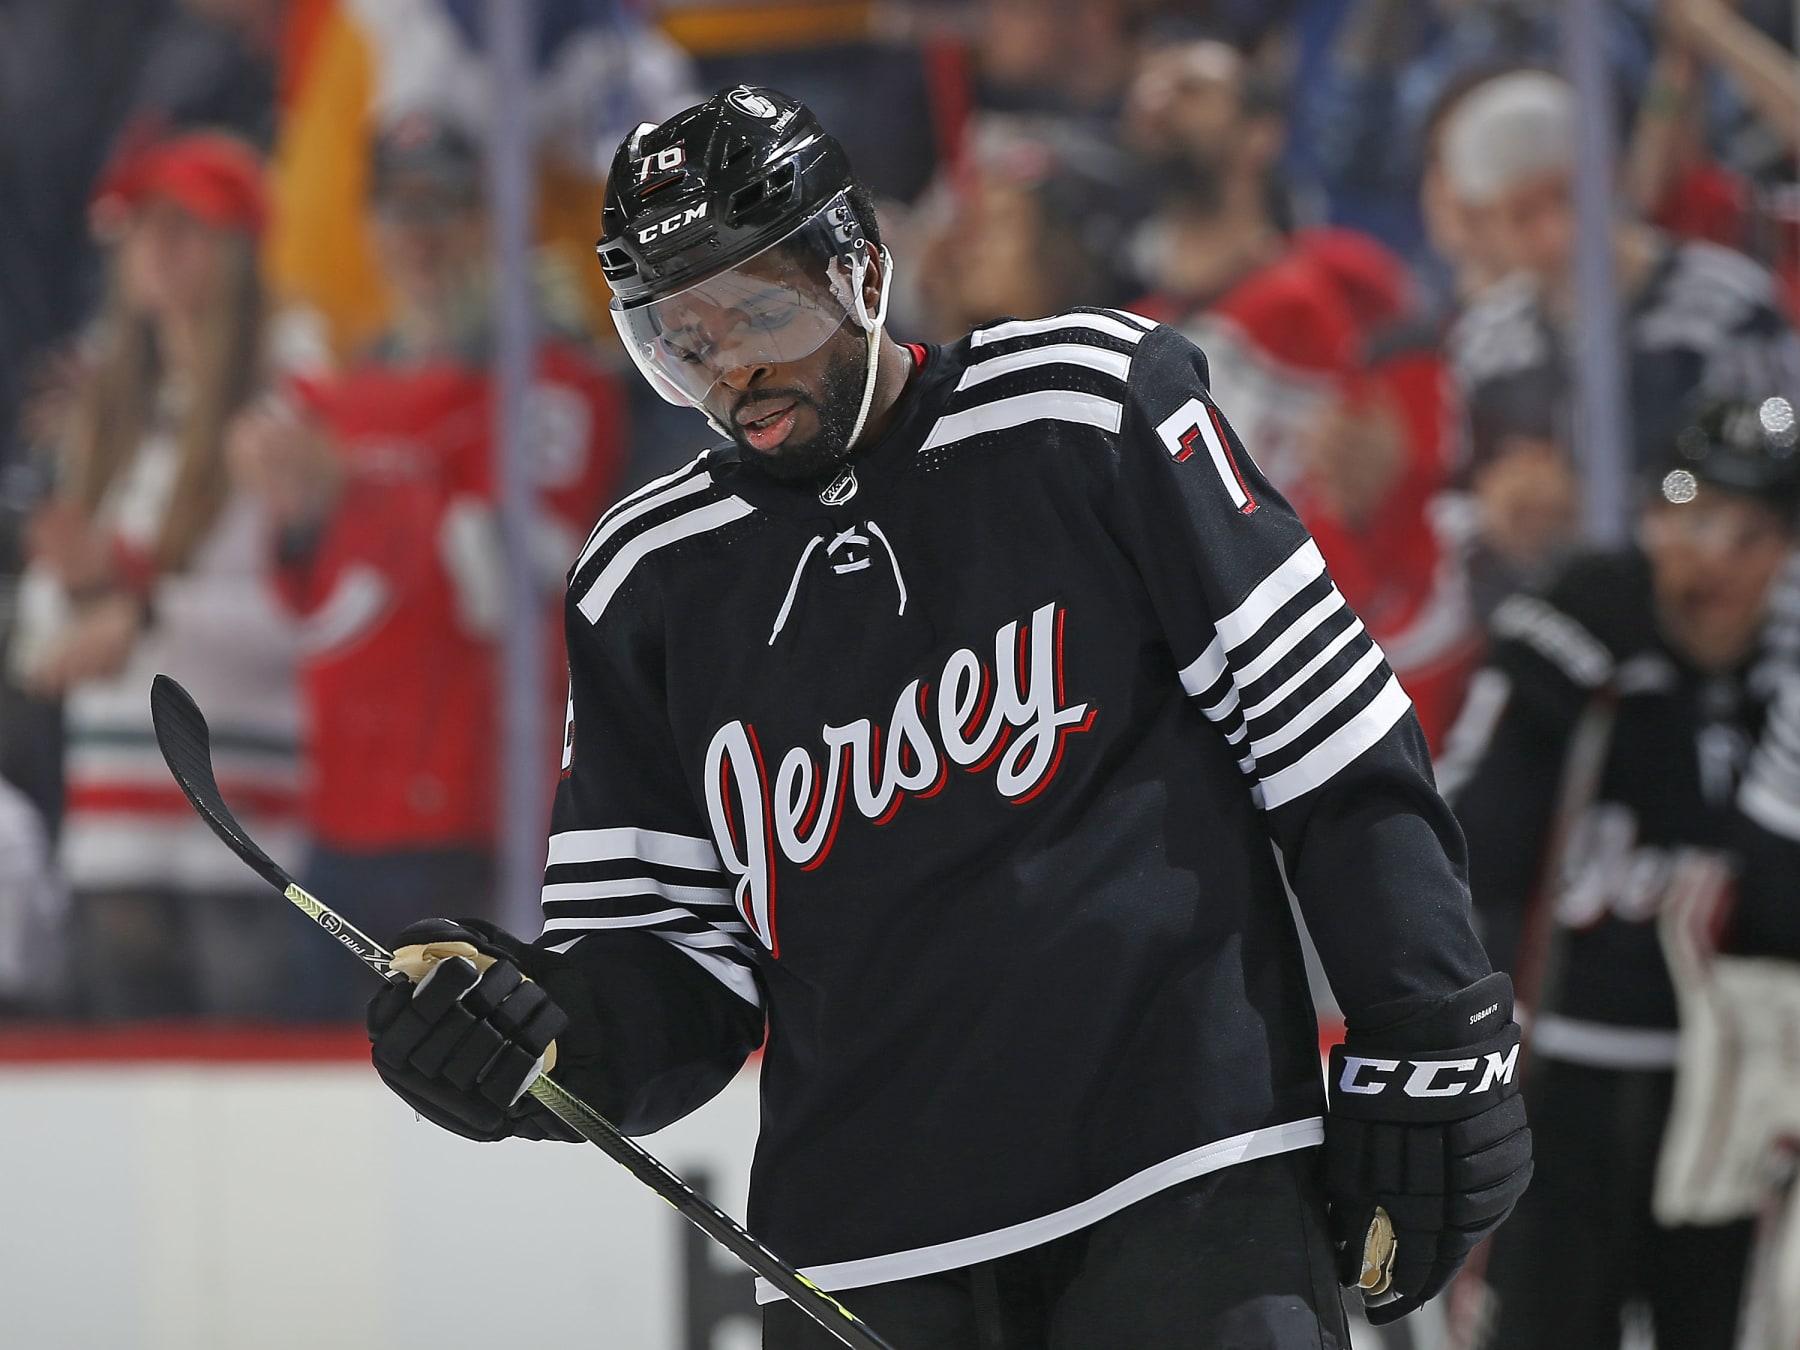 Johnny Gaudreau spurns Devils, picks Blue Jacket in NHL Free Agency